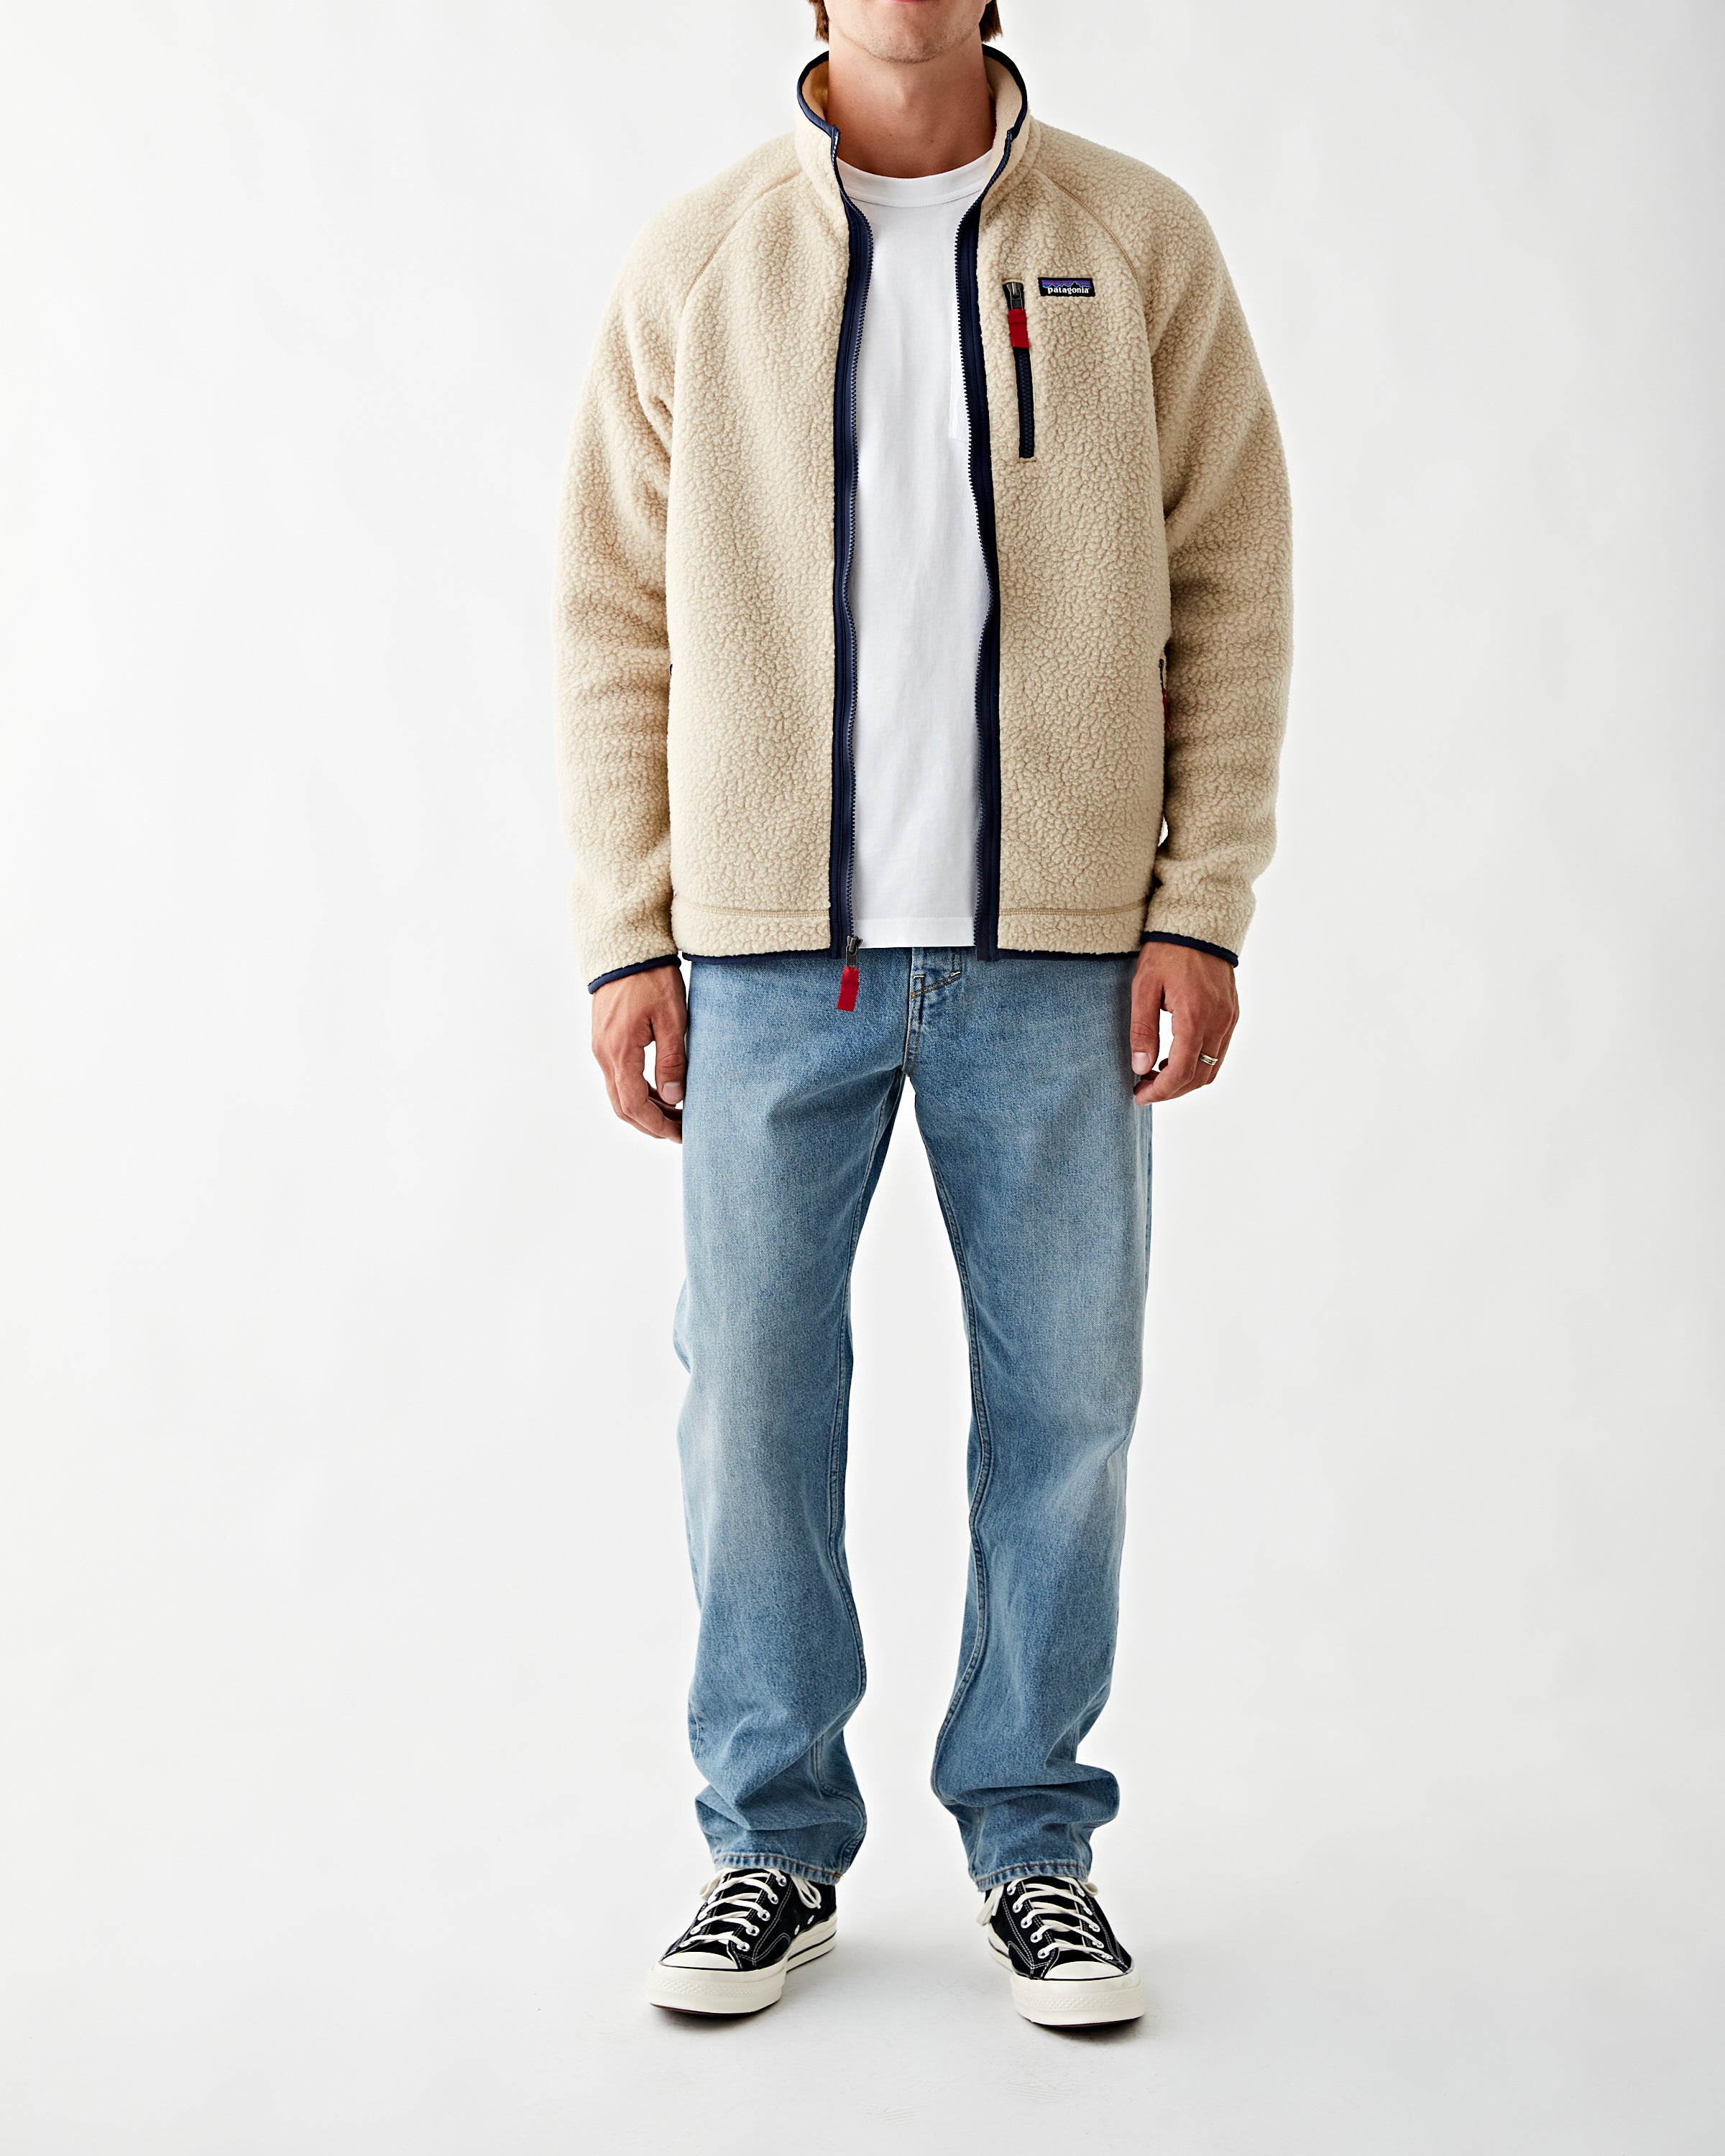 Men's Retro Pile Jacket El Cap Khaki